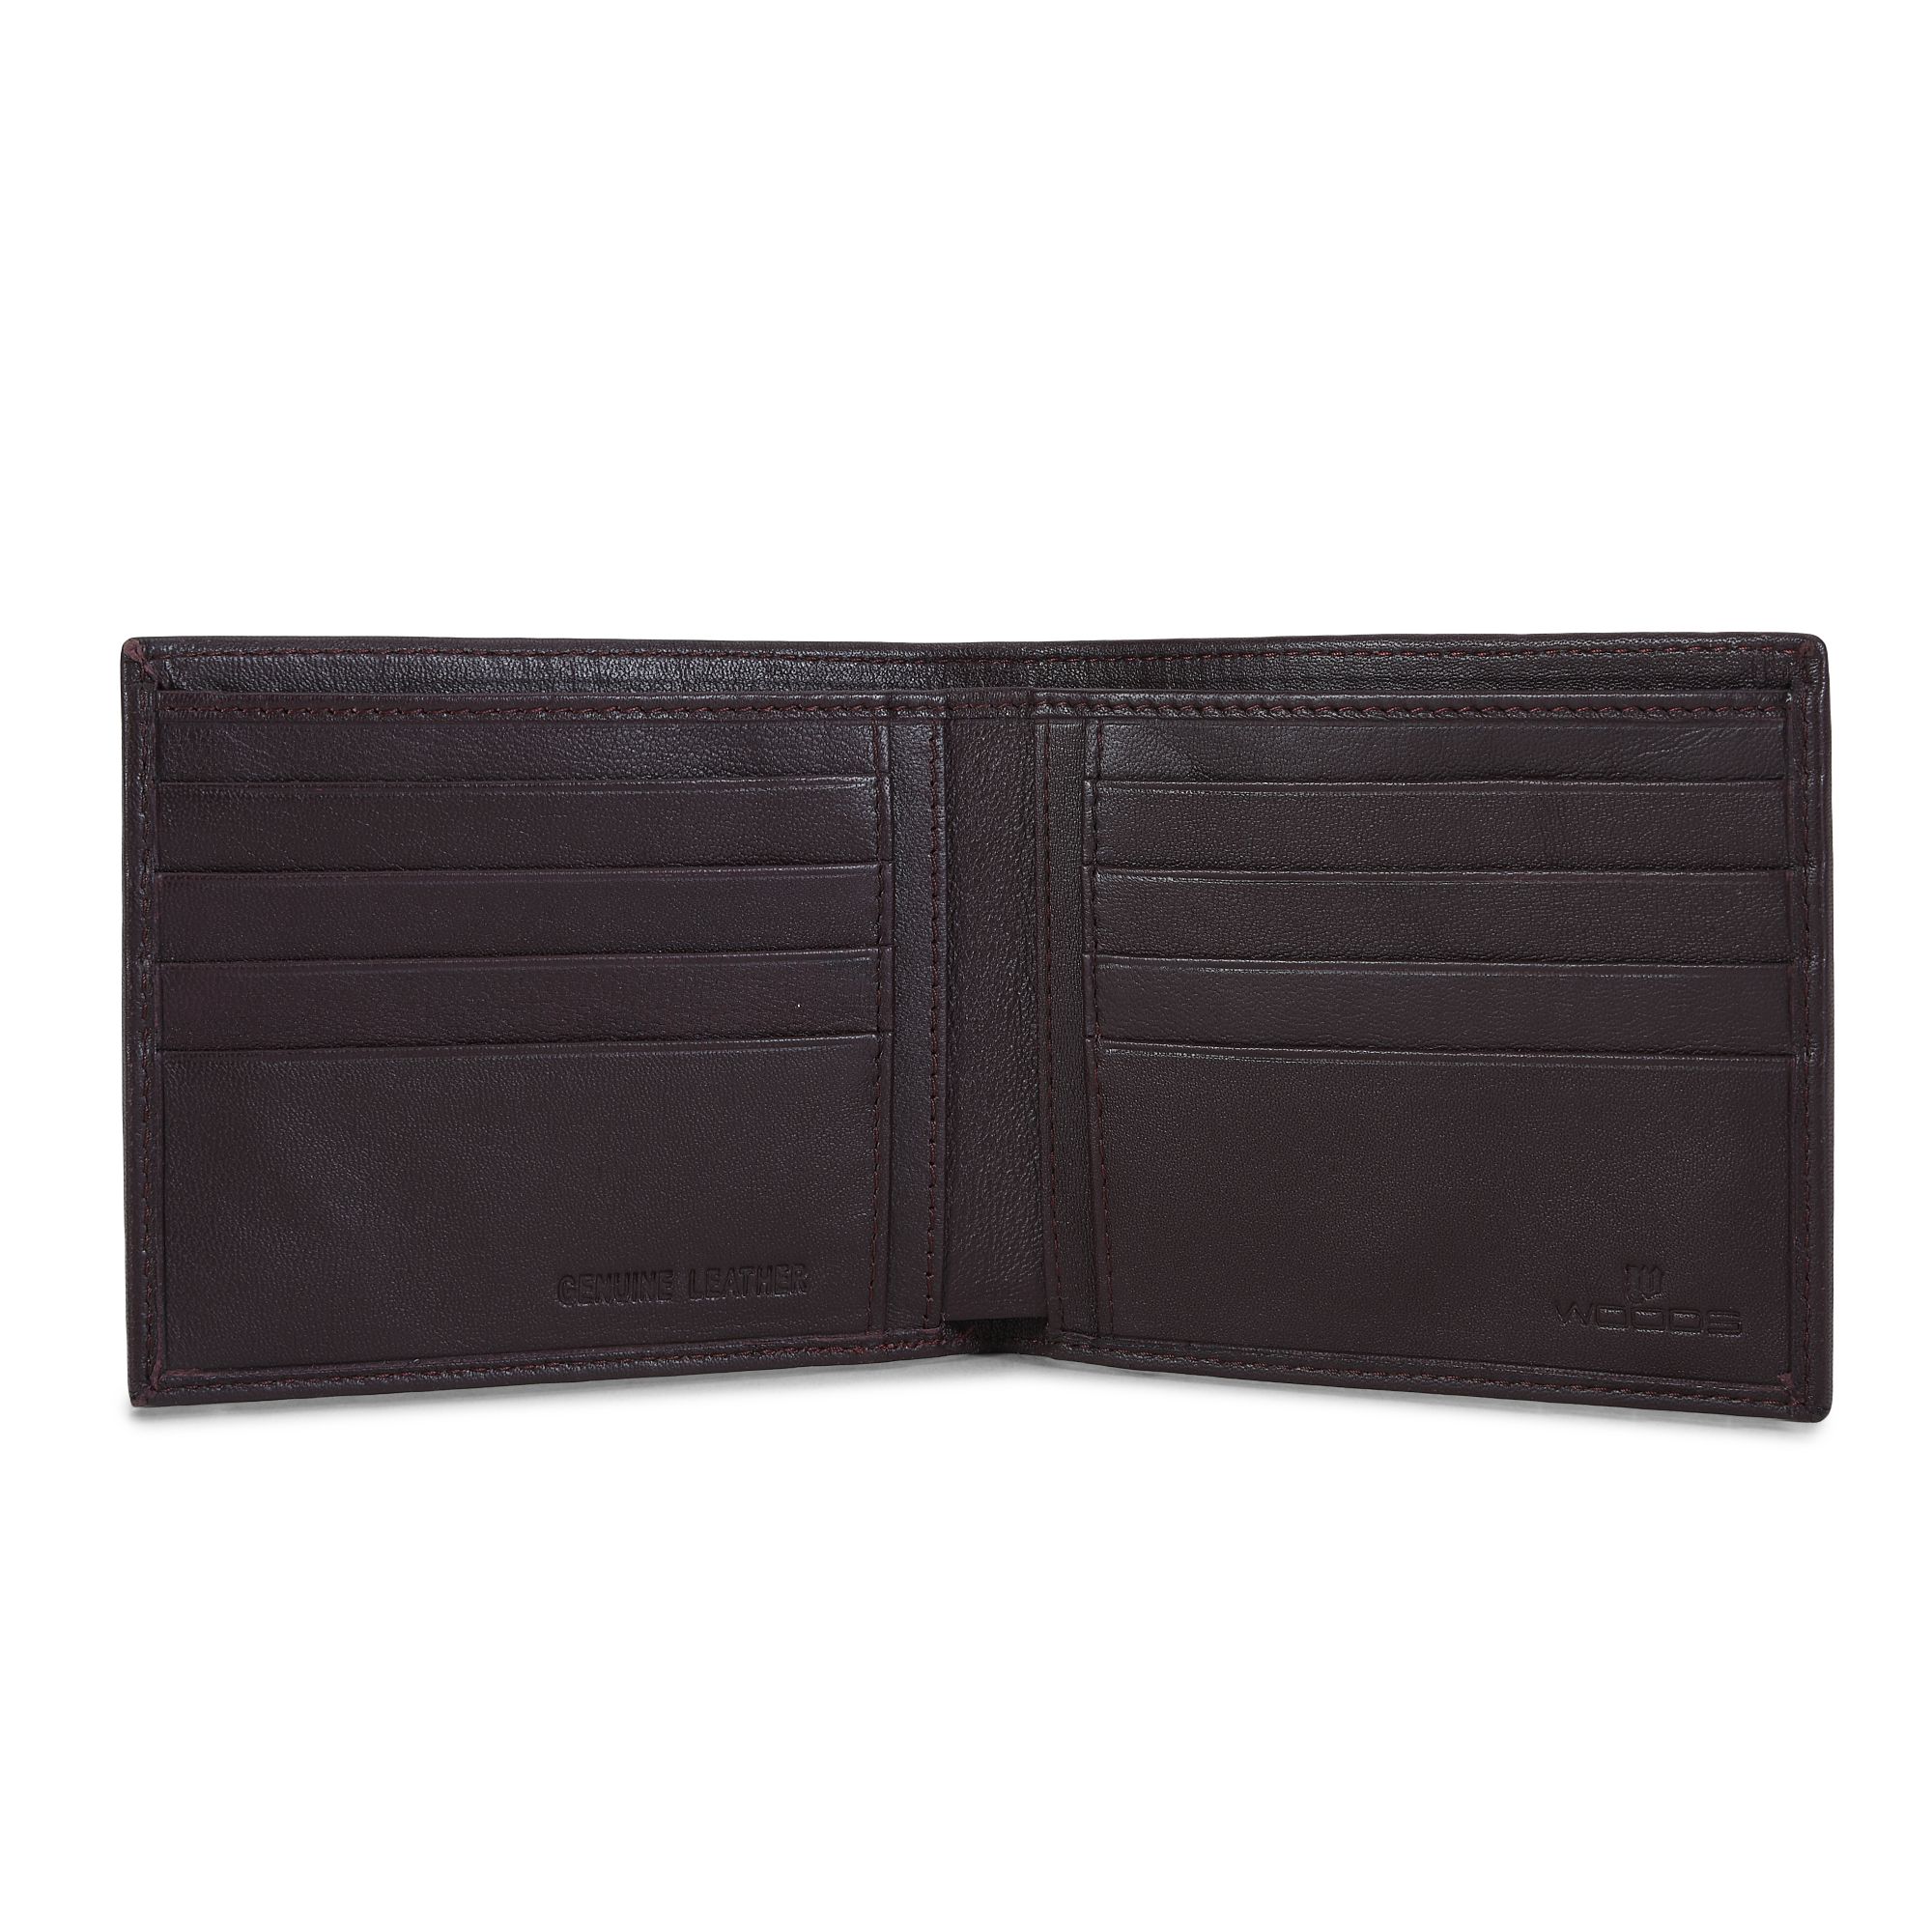 Maroon leather wallet